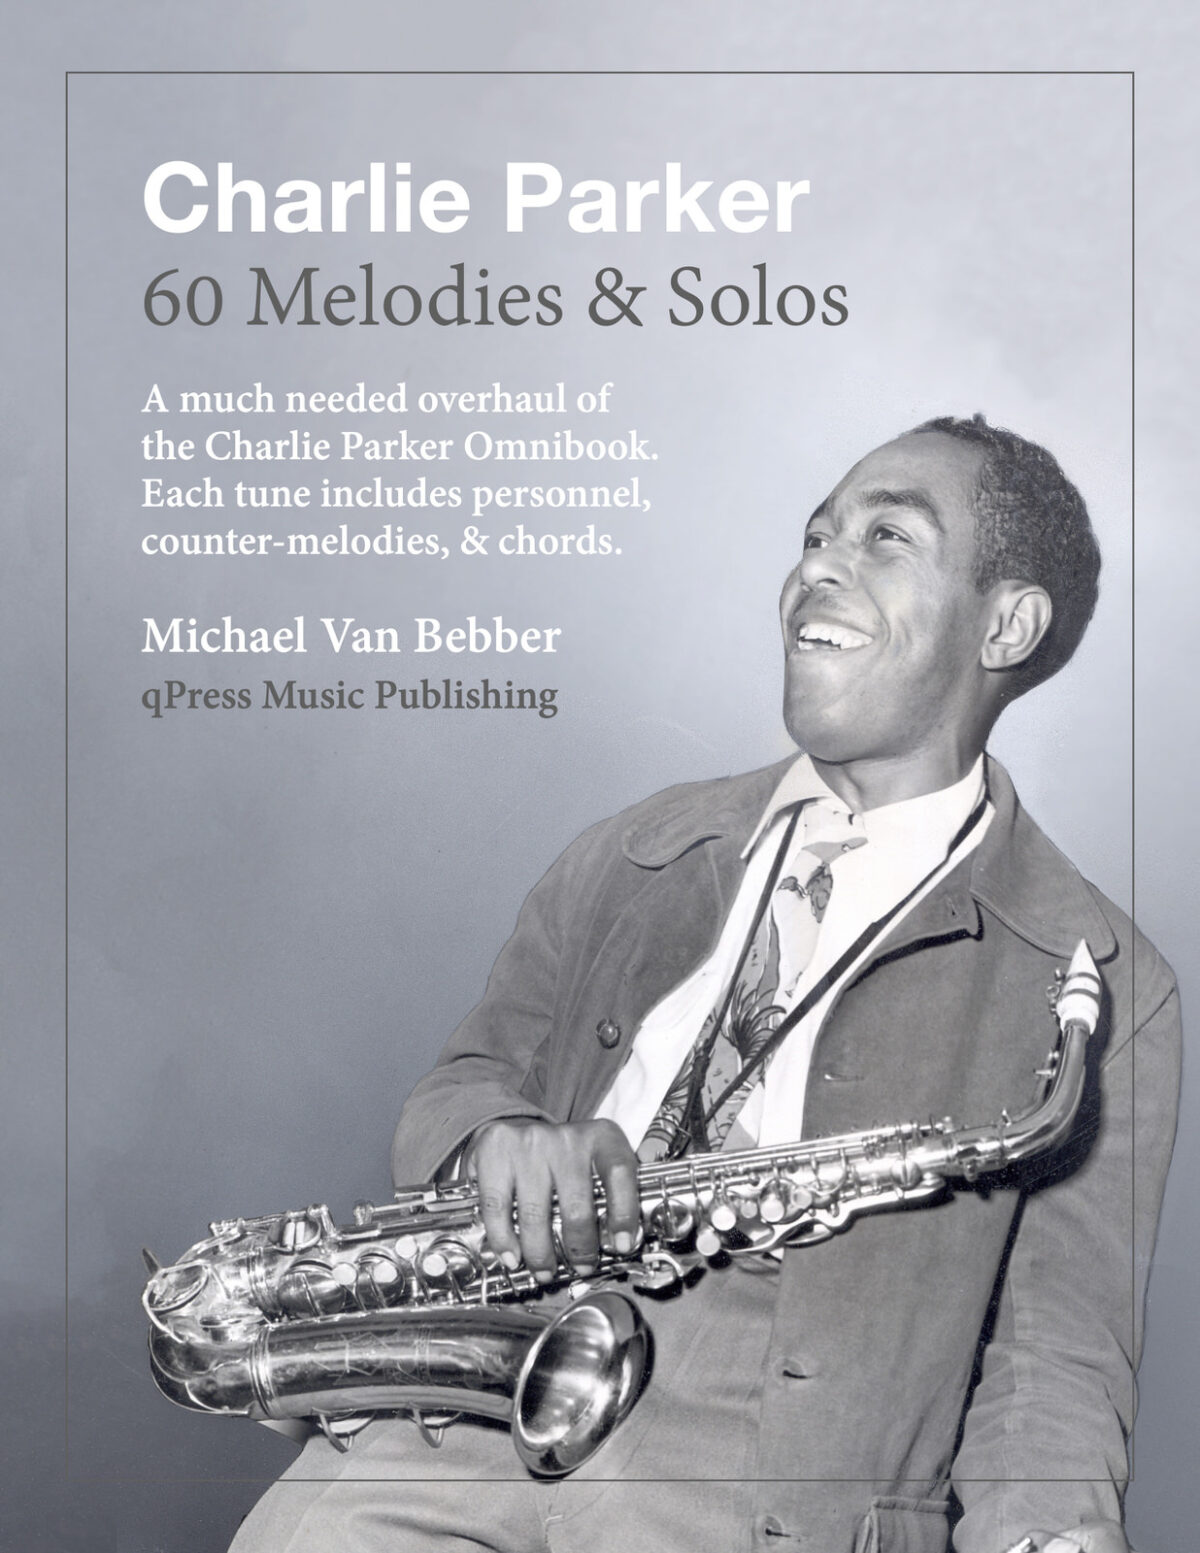 Charlie Parker's 60 Melodies & Solos